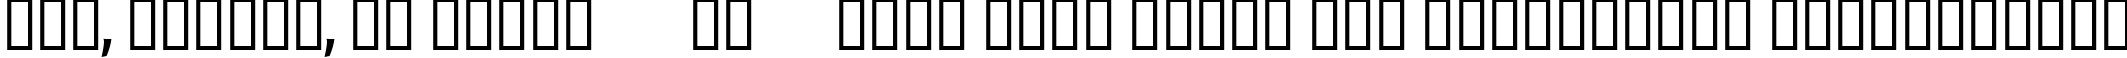 Пример написания шрифтом BOOTLE текста на украинском